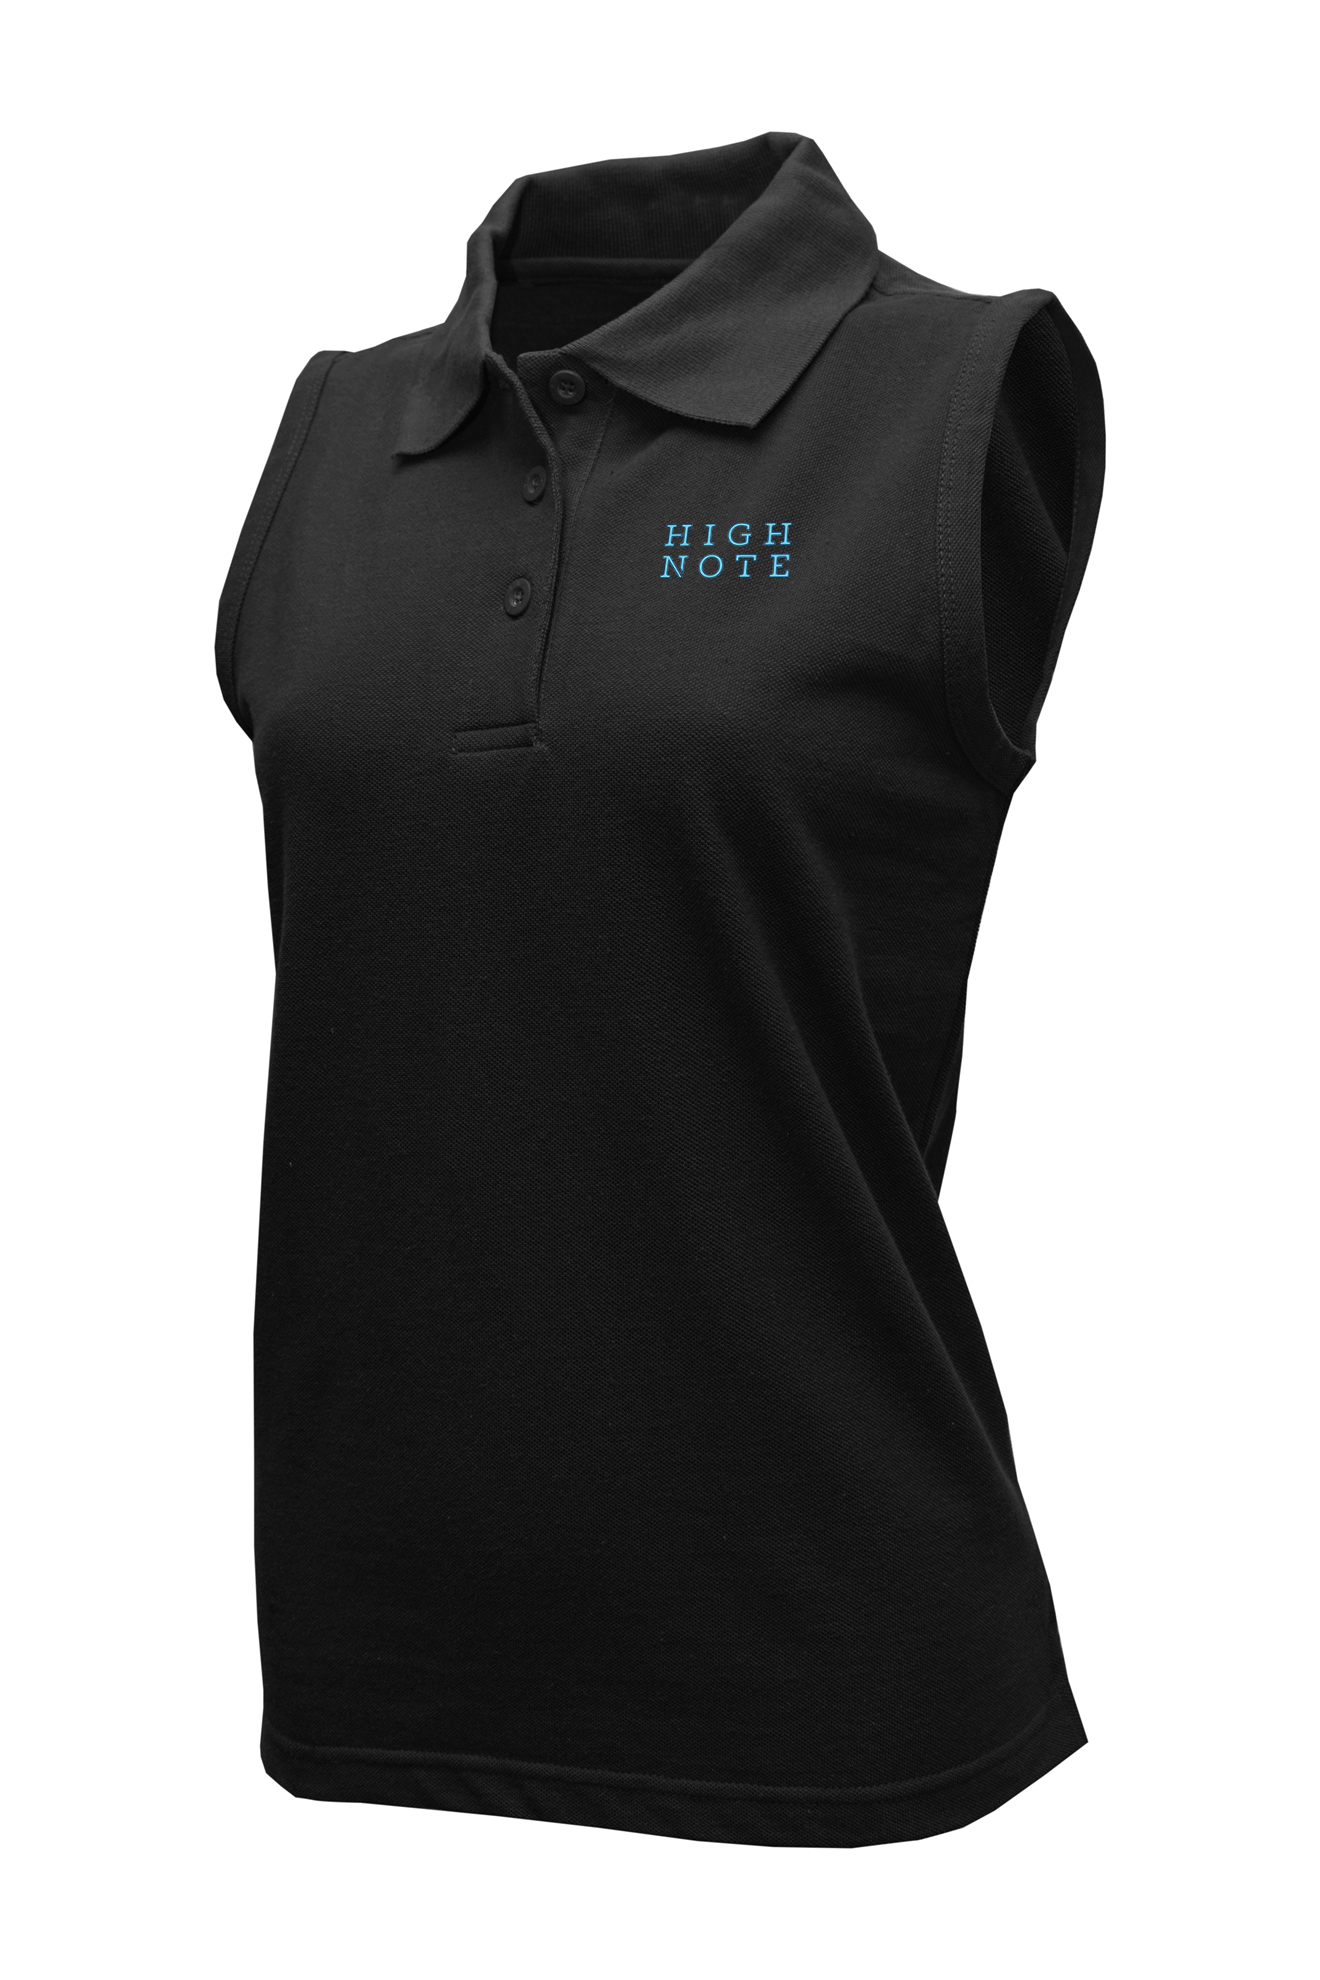 custom design of BAW Athletic Wear 981L - Sleeveless Polo